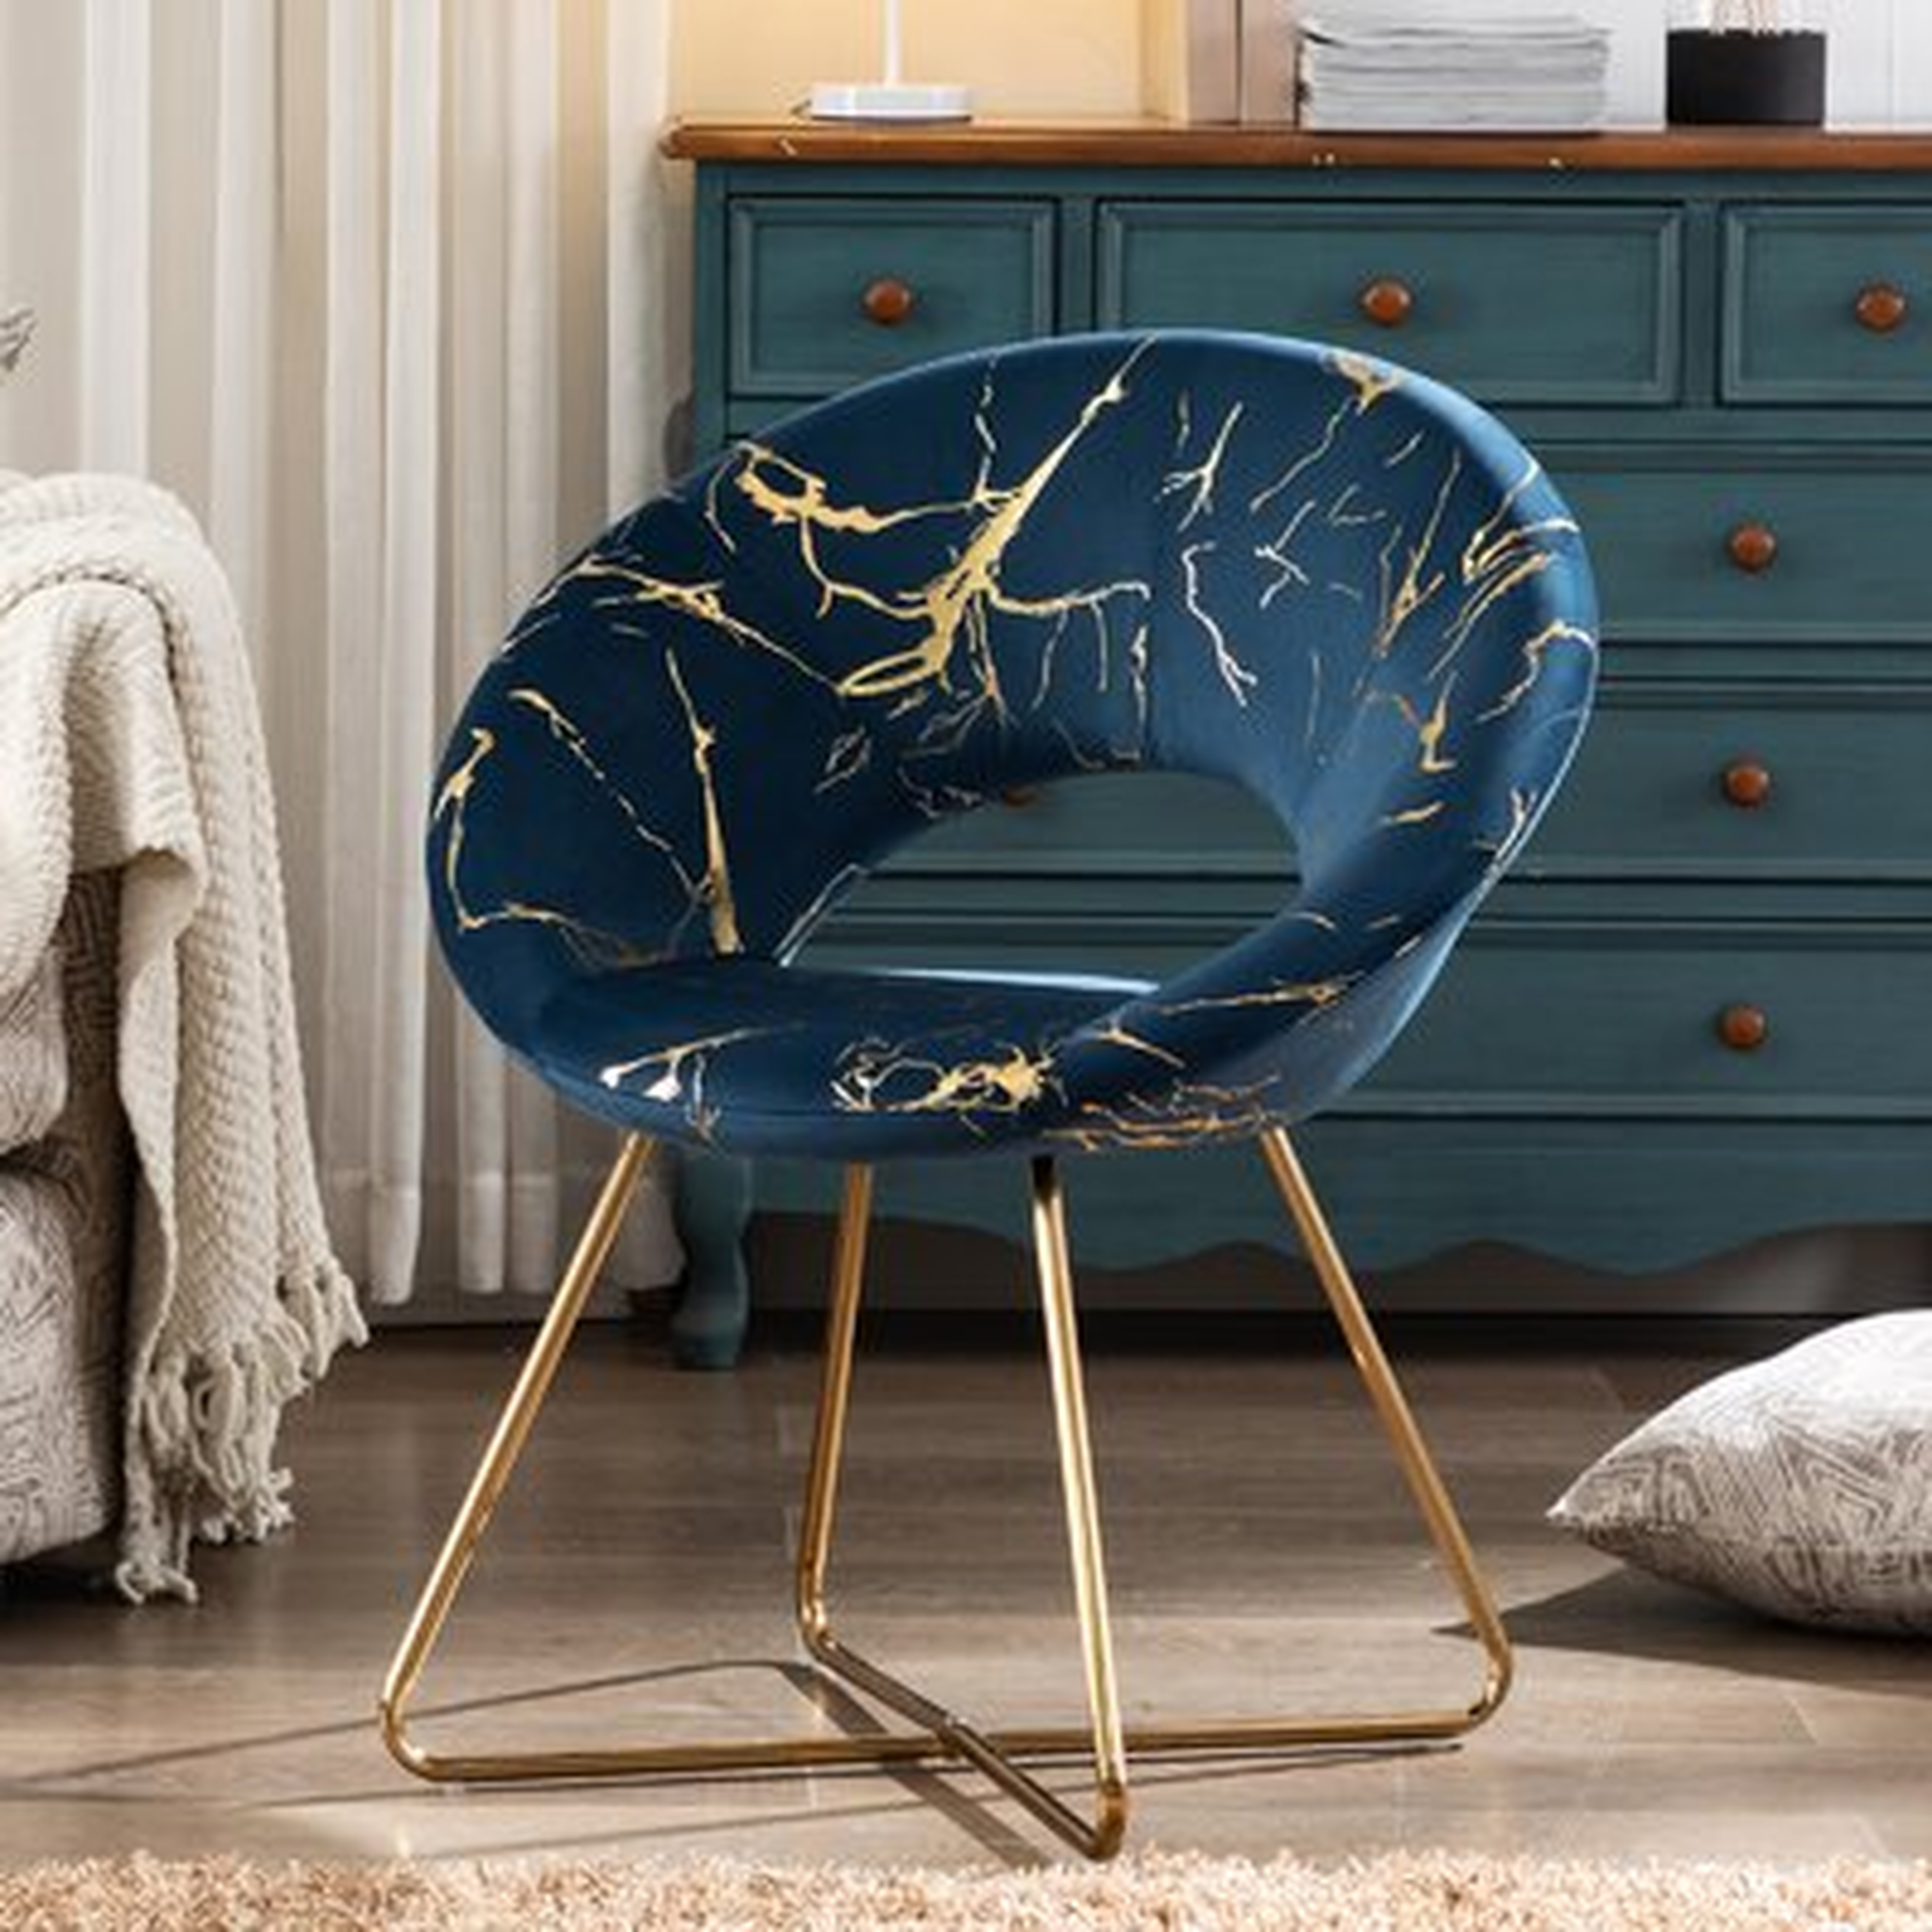 Velvet Upholstered Arm Chair Lounge Chair Chair With Gold Legs For Living Room Bedroom - Wayfair